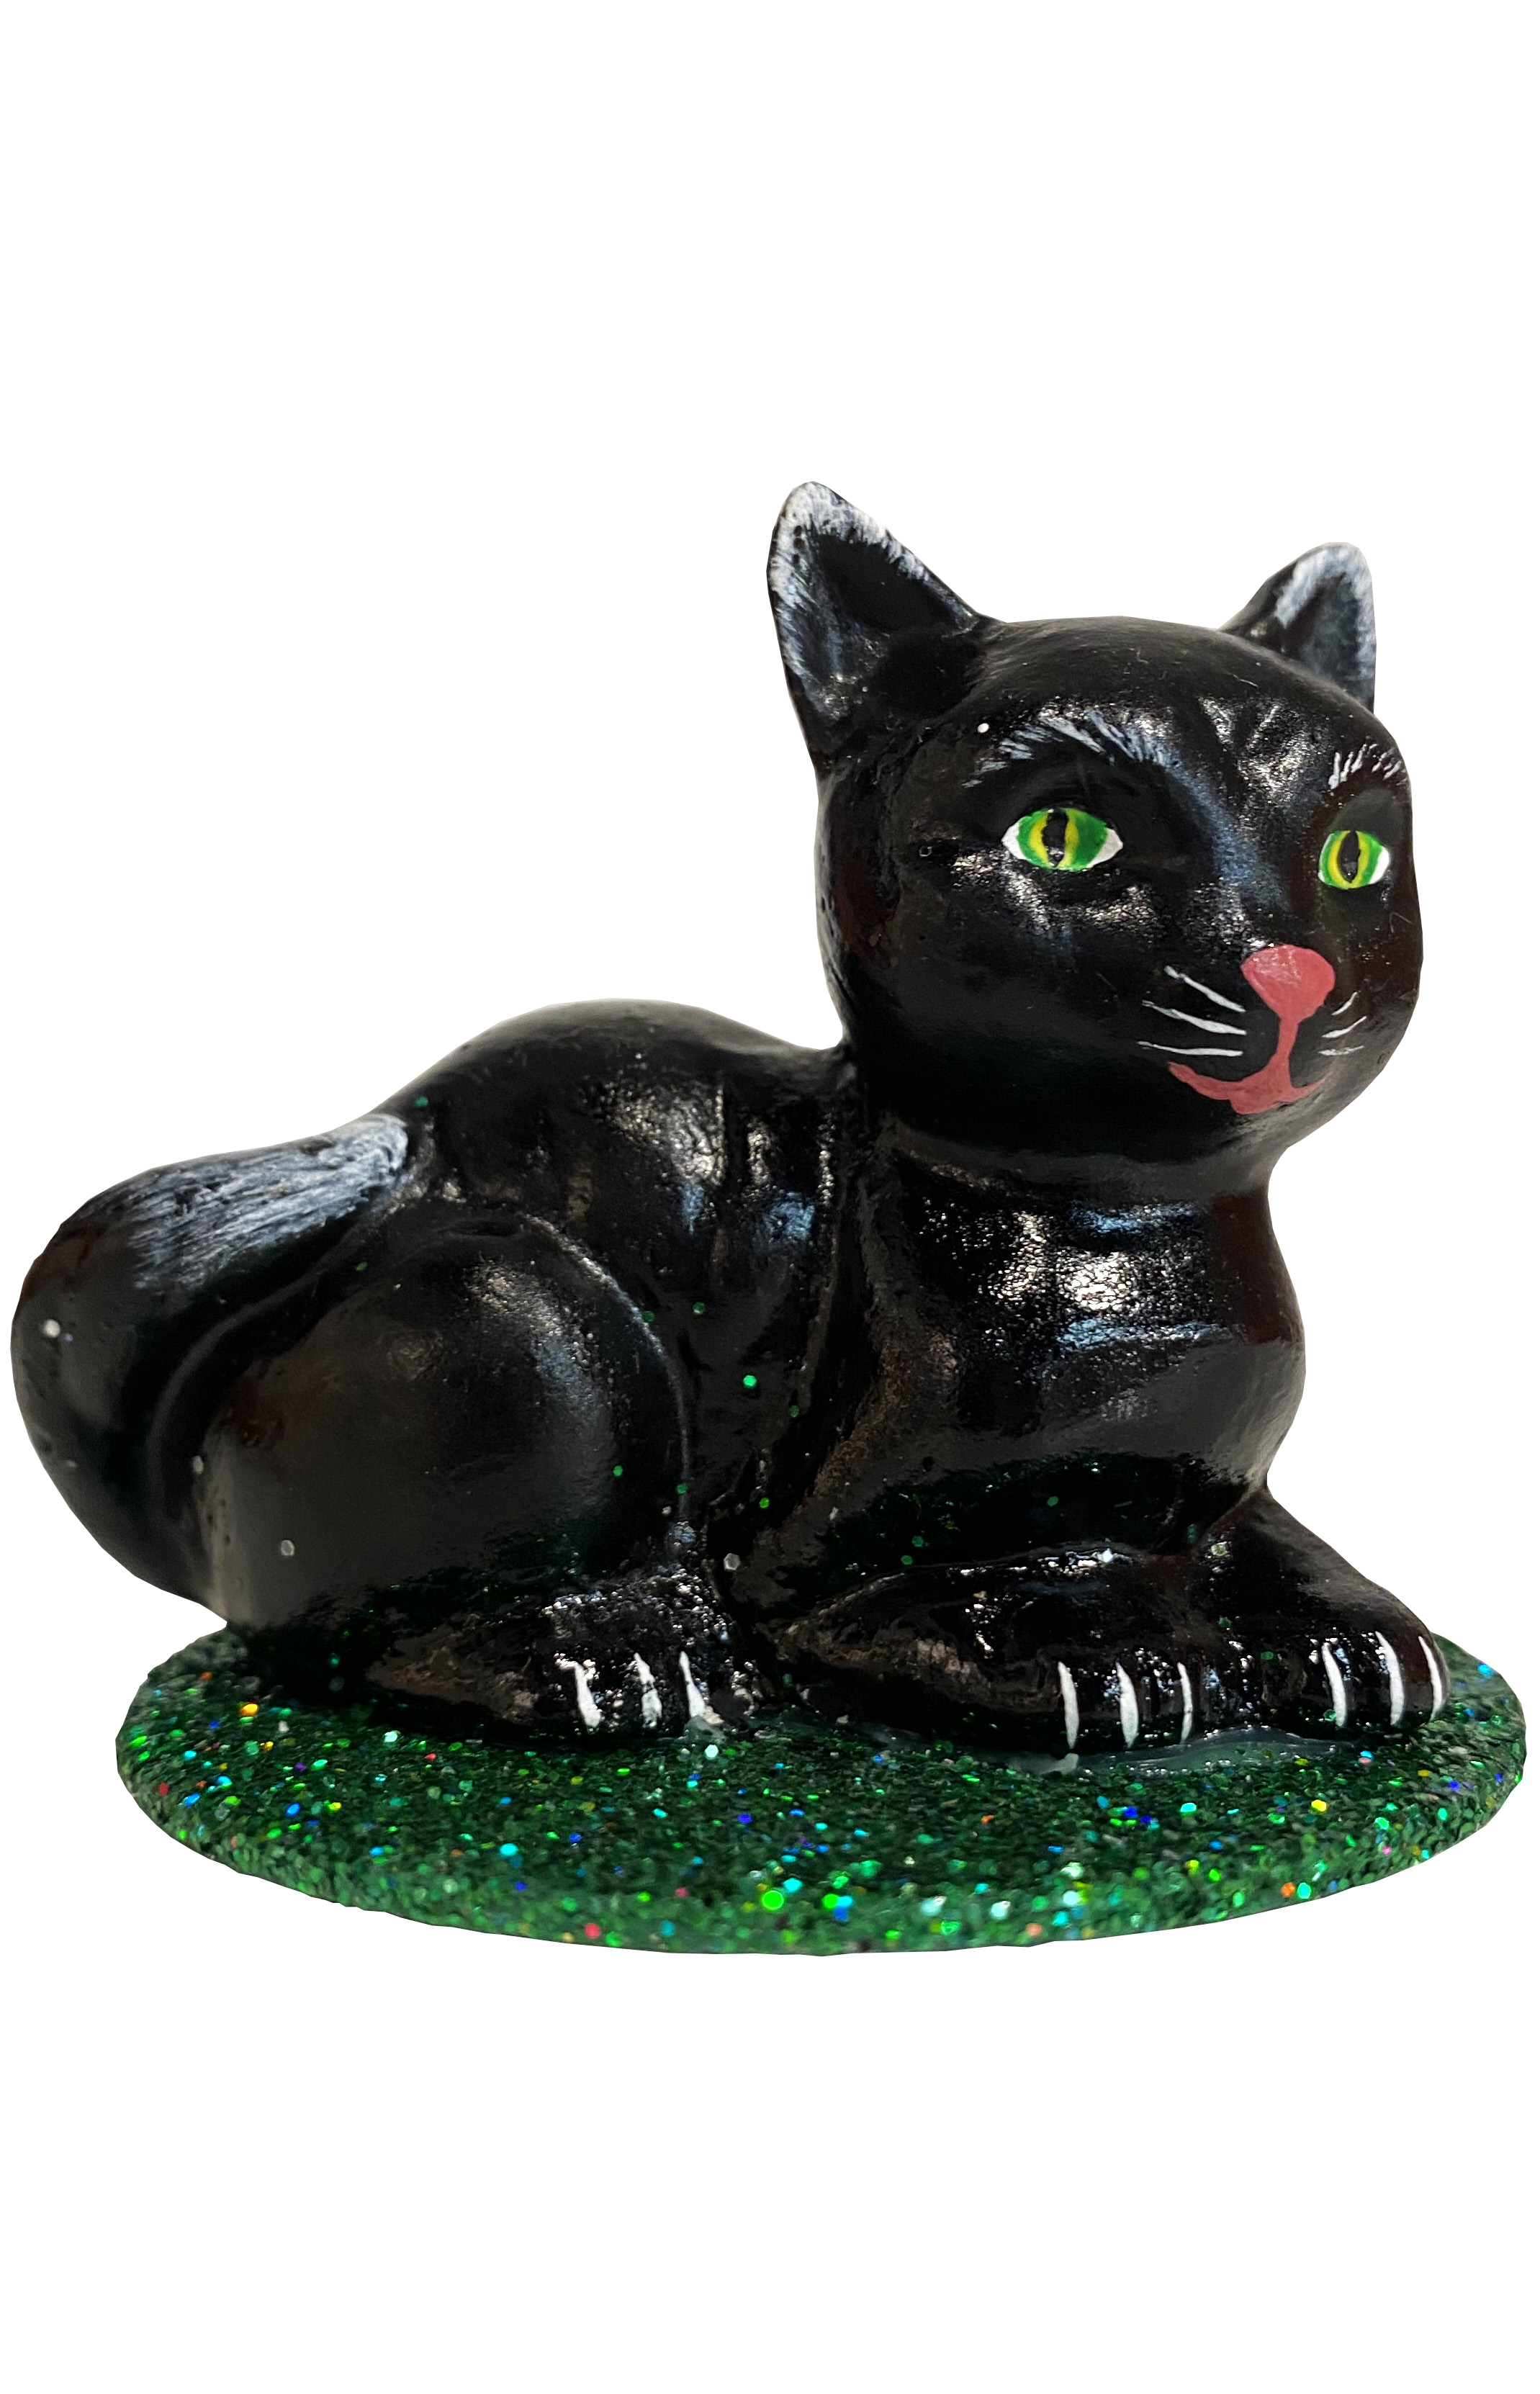 510 - Schaller Paper Mache Figurine - Small Black Cat - 2.5